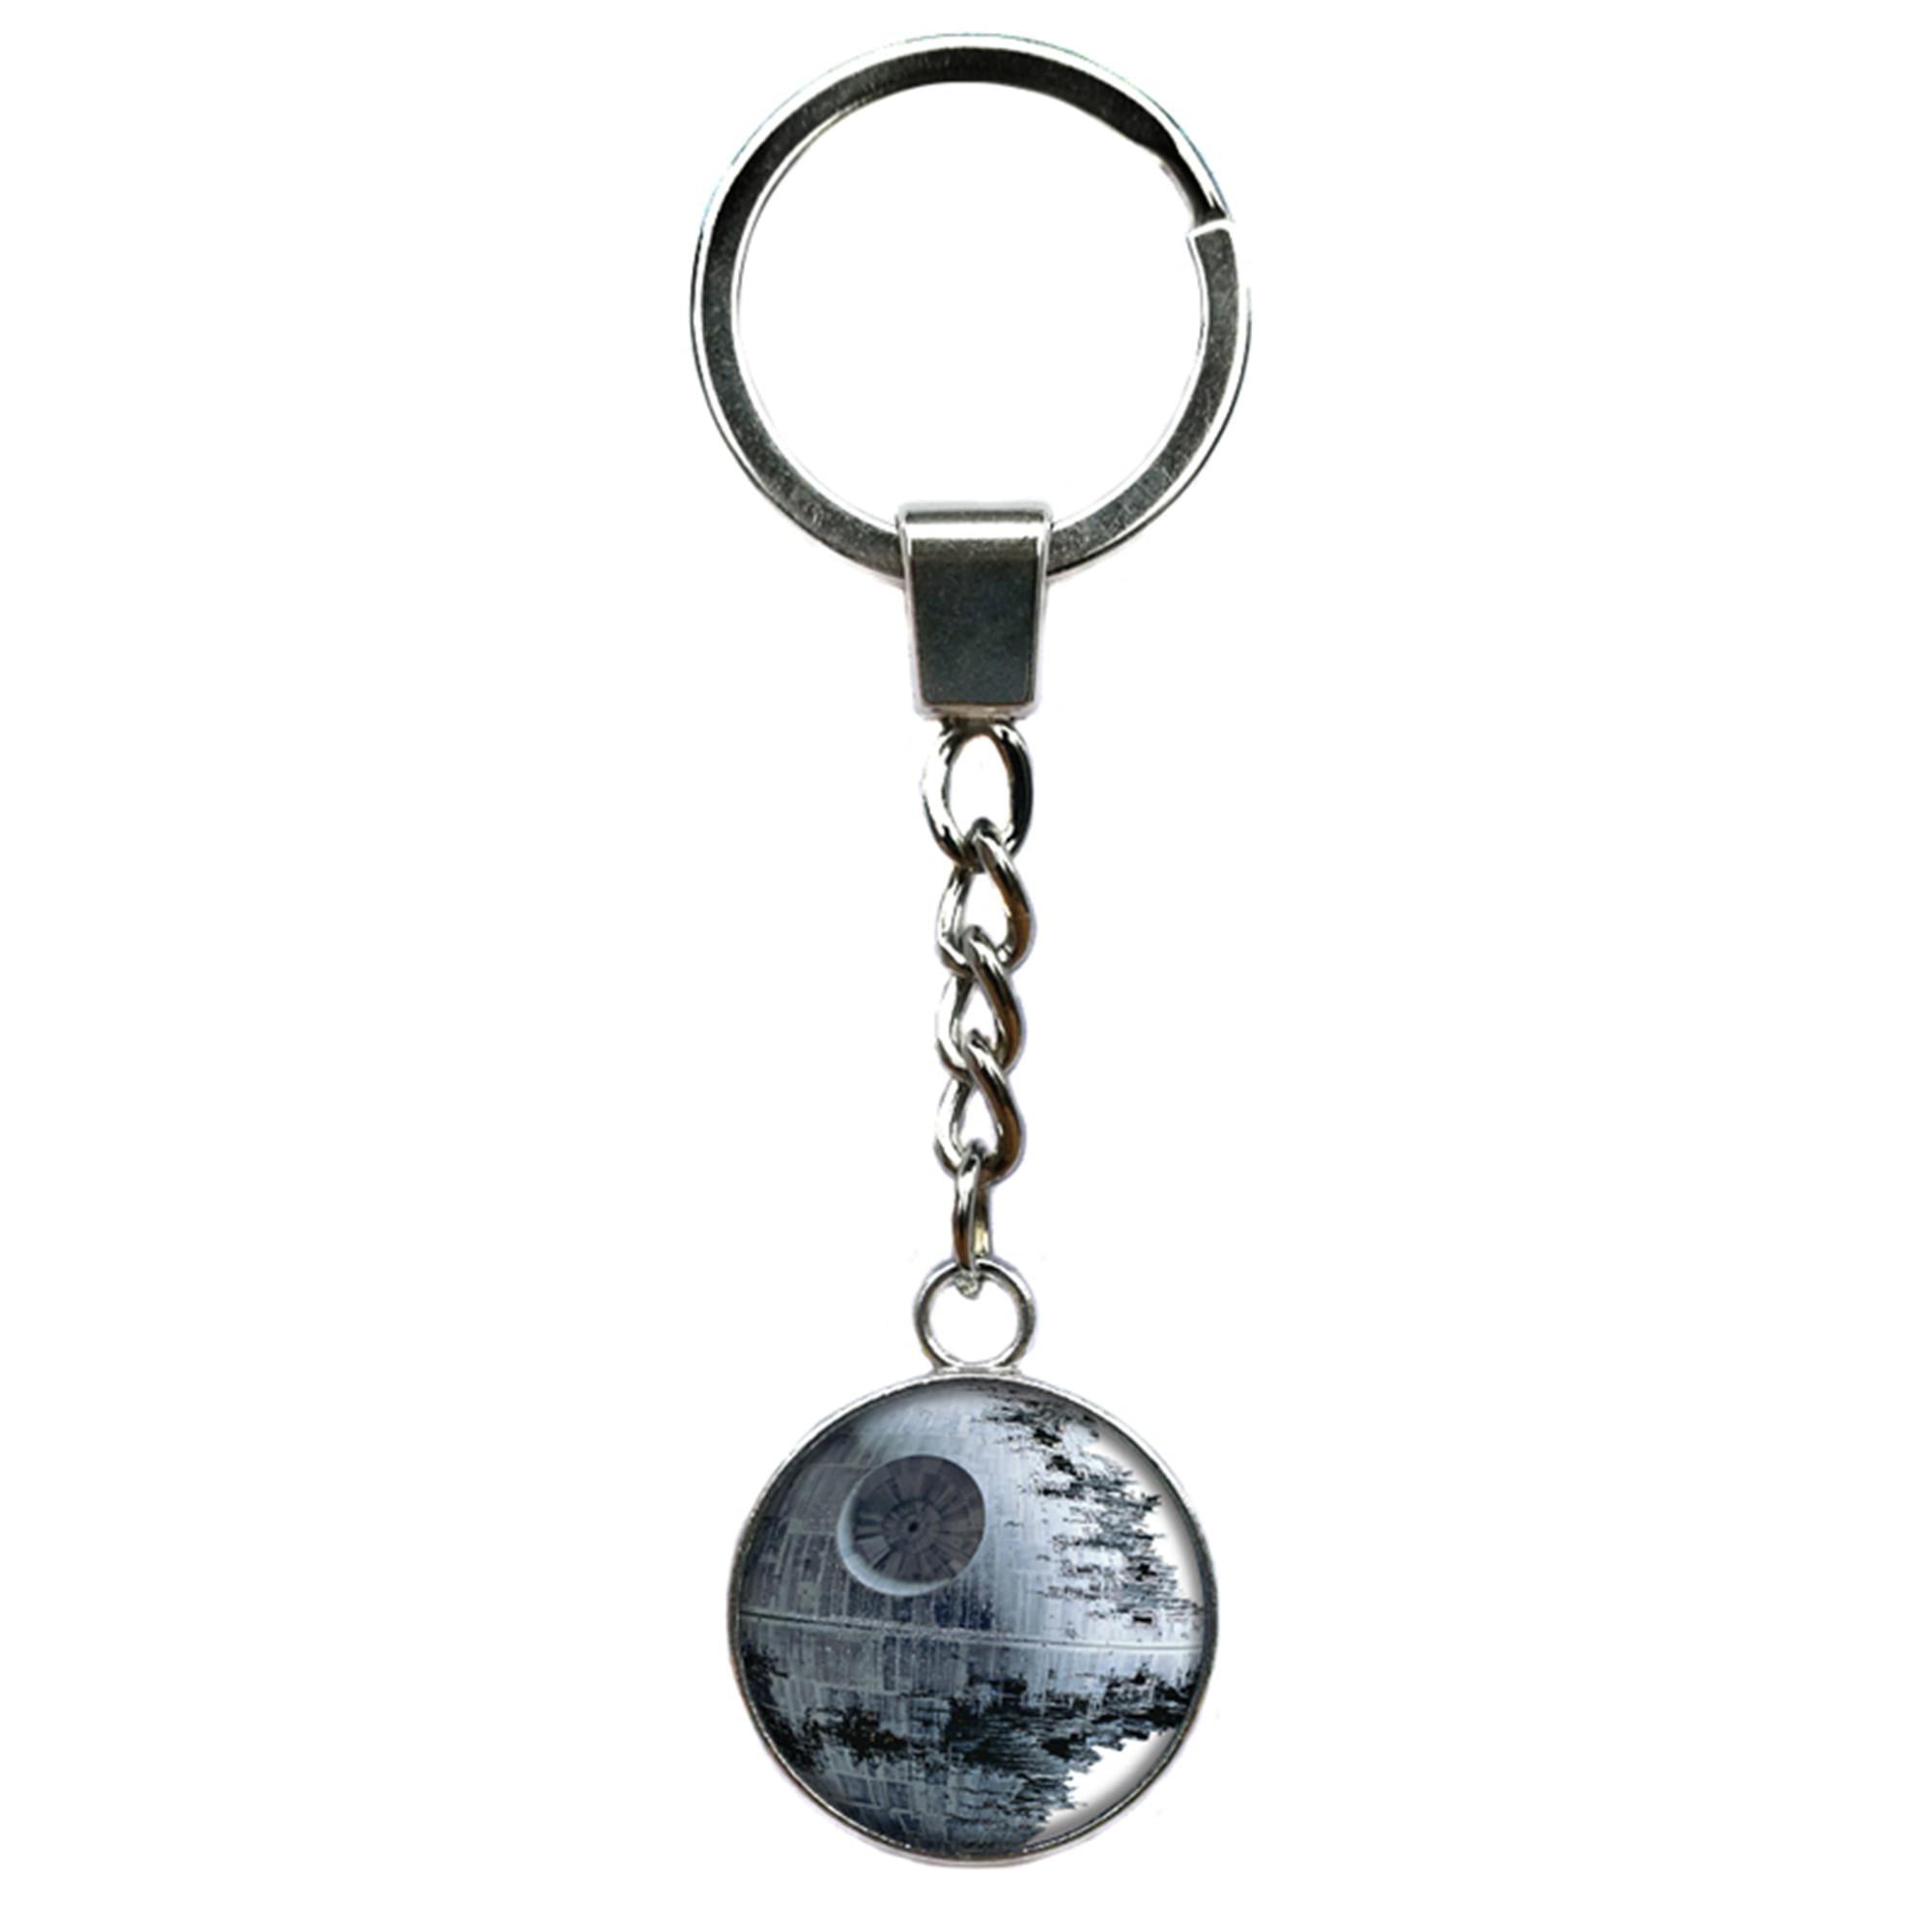 STAR WARS DEATH STAR Figurine FULL metal replica keychain Key chain collectible 